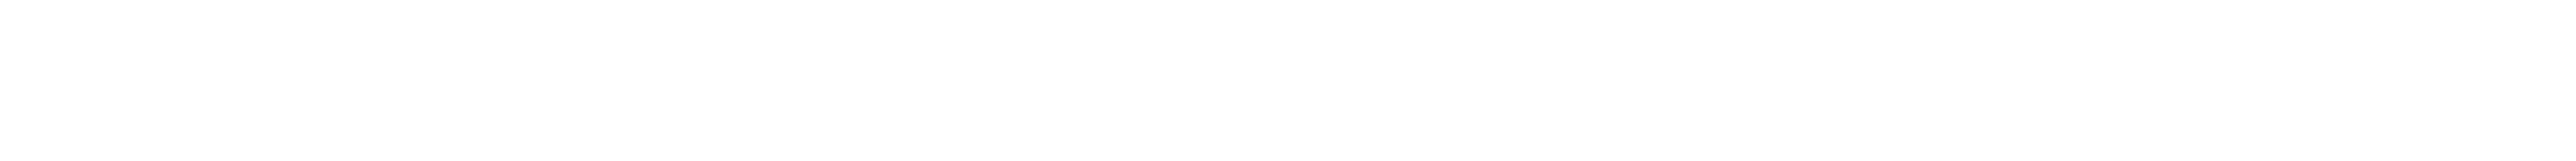 themomproject logo